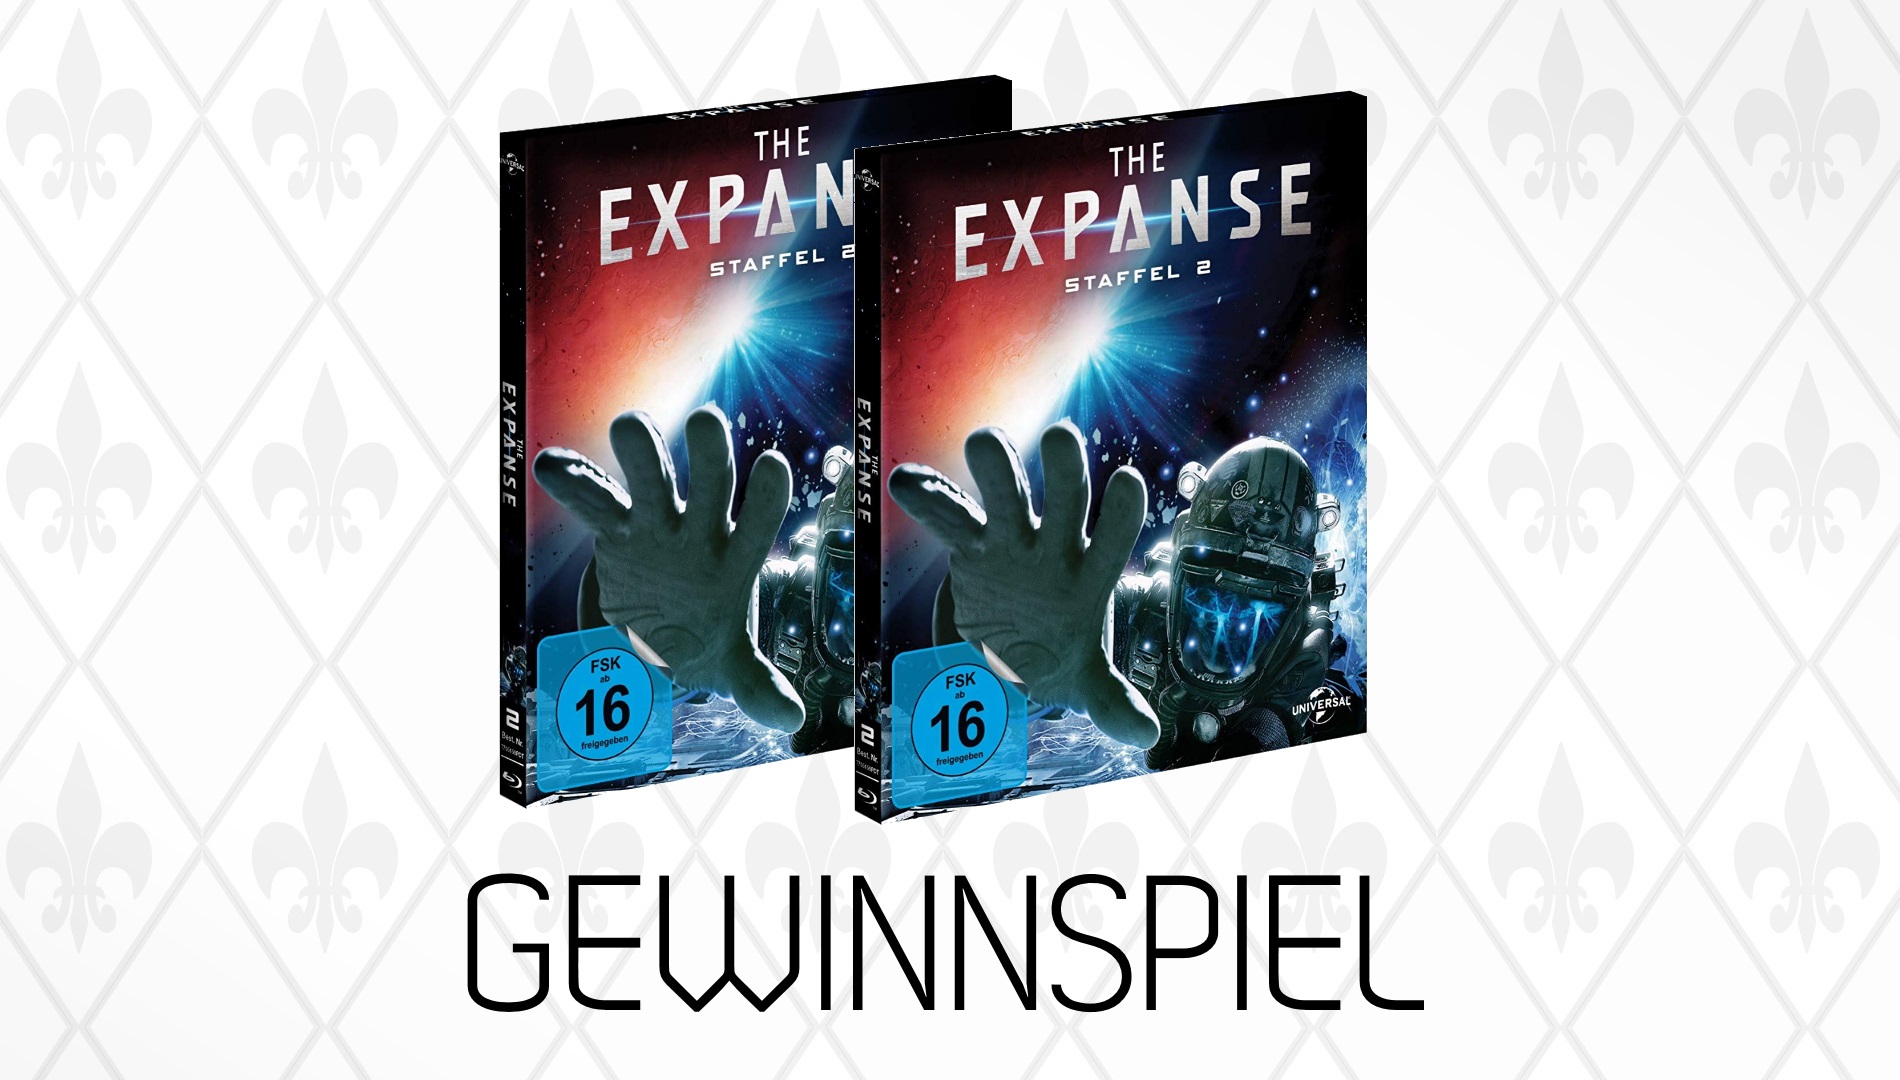 The Expanse: Staffel 2